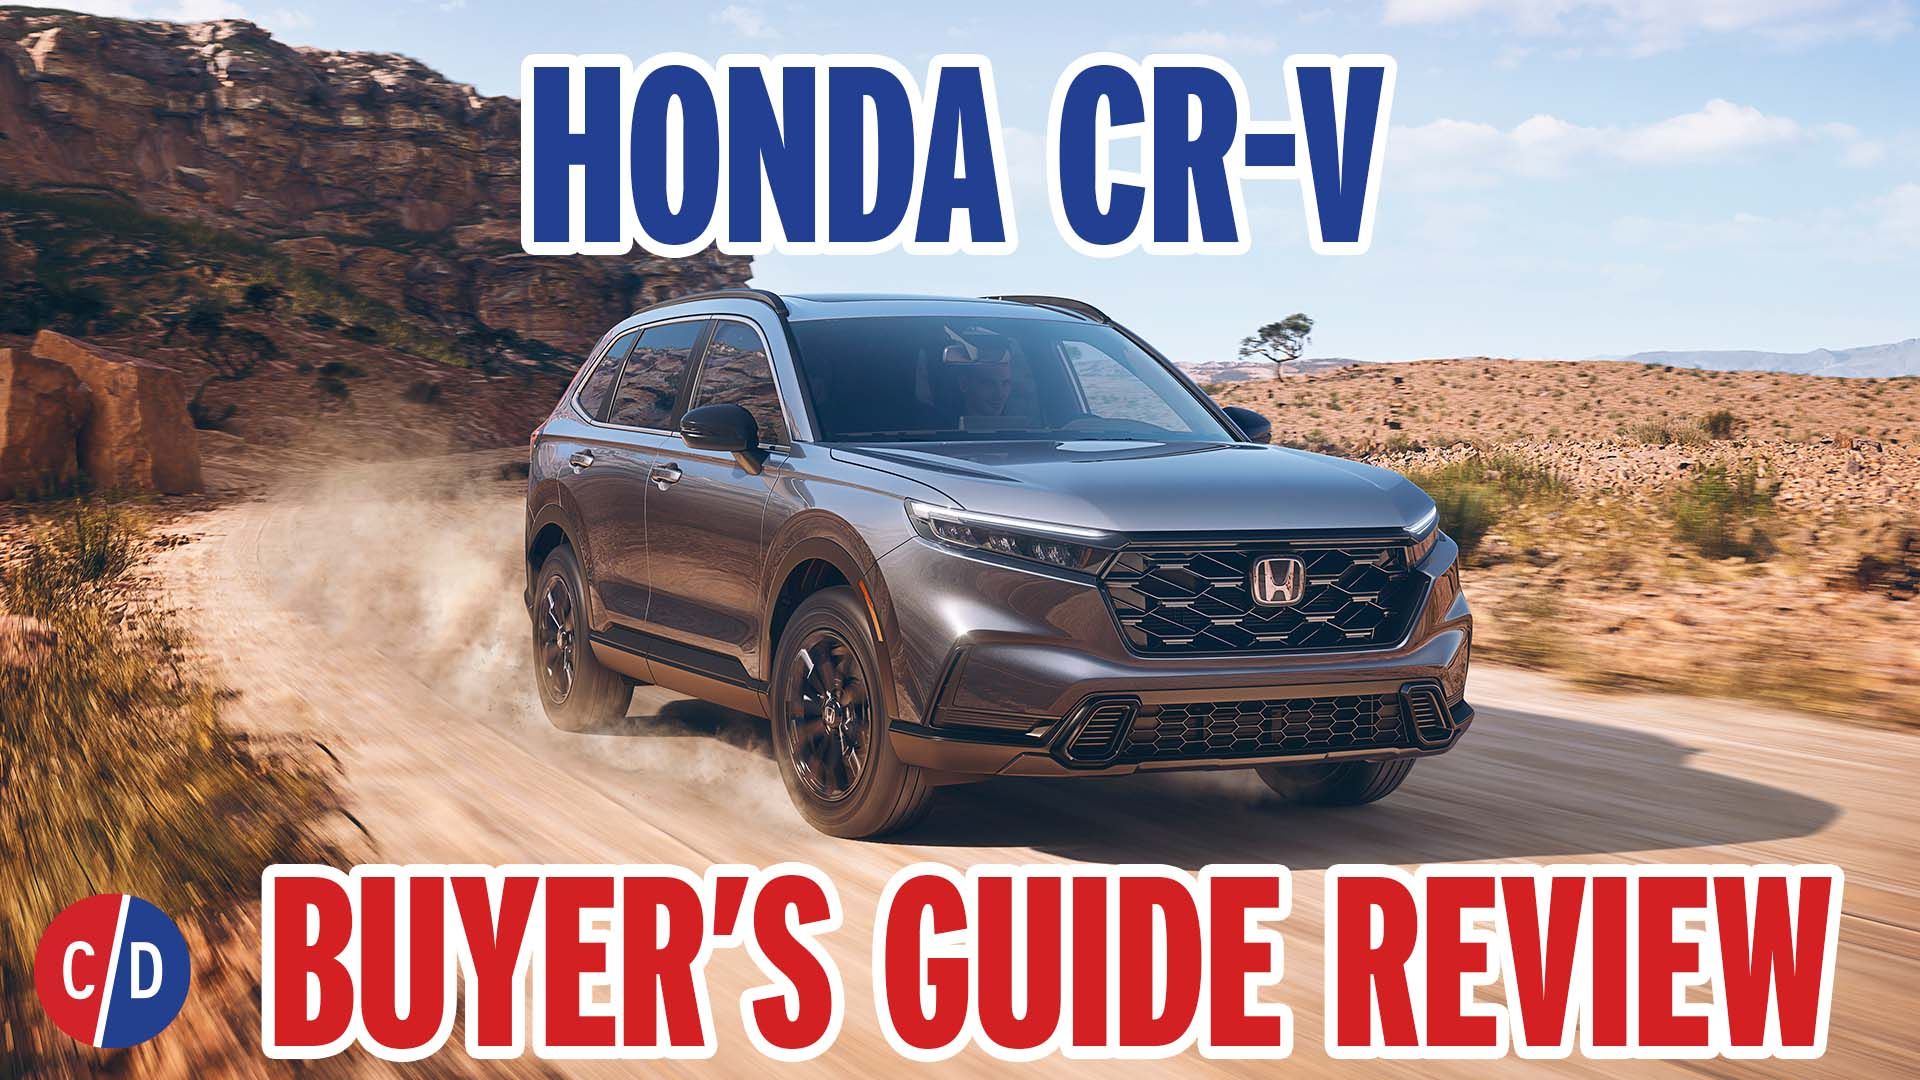 Honda CR-V Price, Images, Mileage, Reviews, Specs